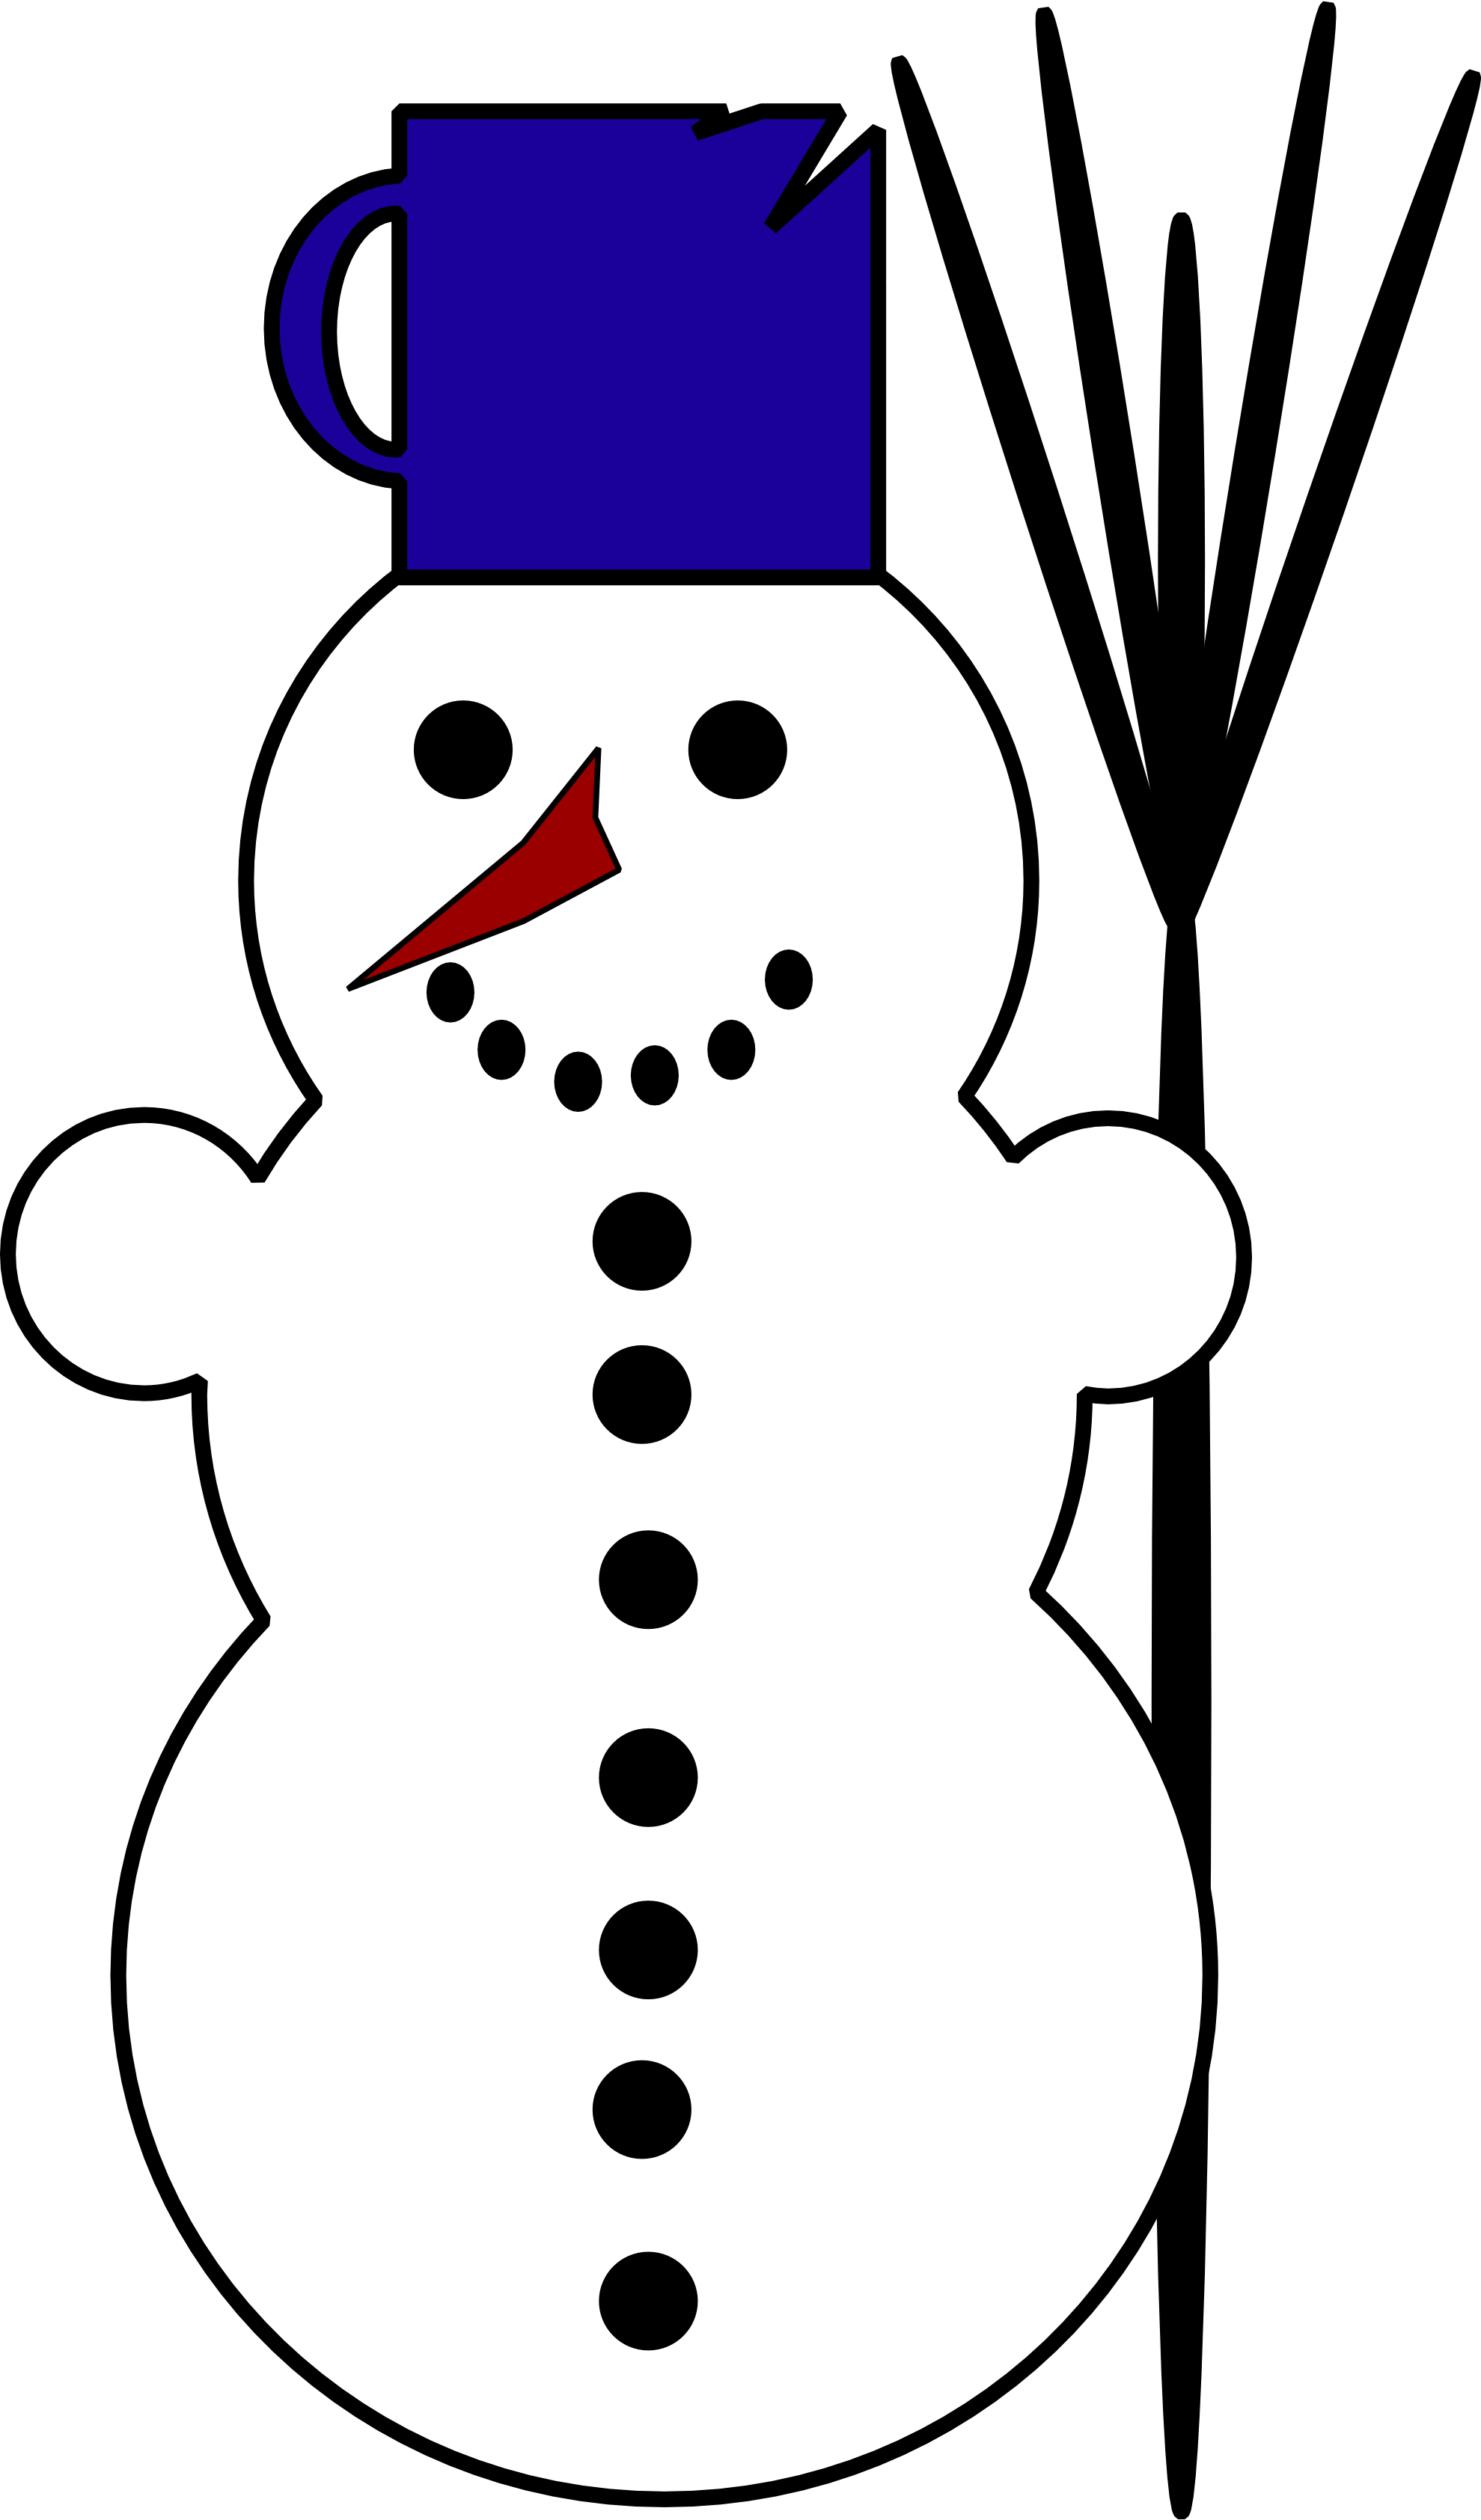 machovka snowman 2 scalable vector graphics svg clip art coloring ...